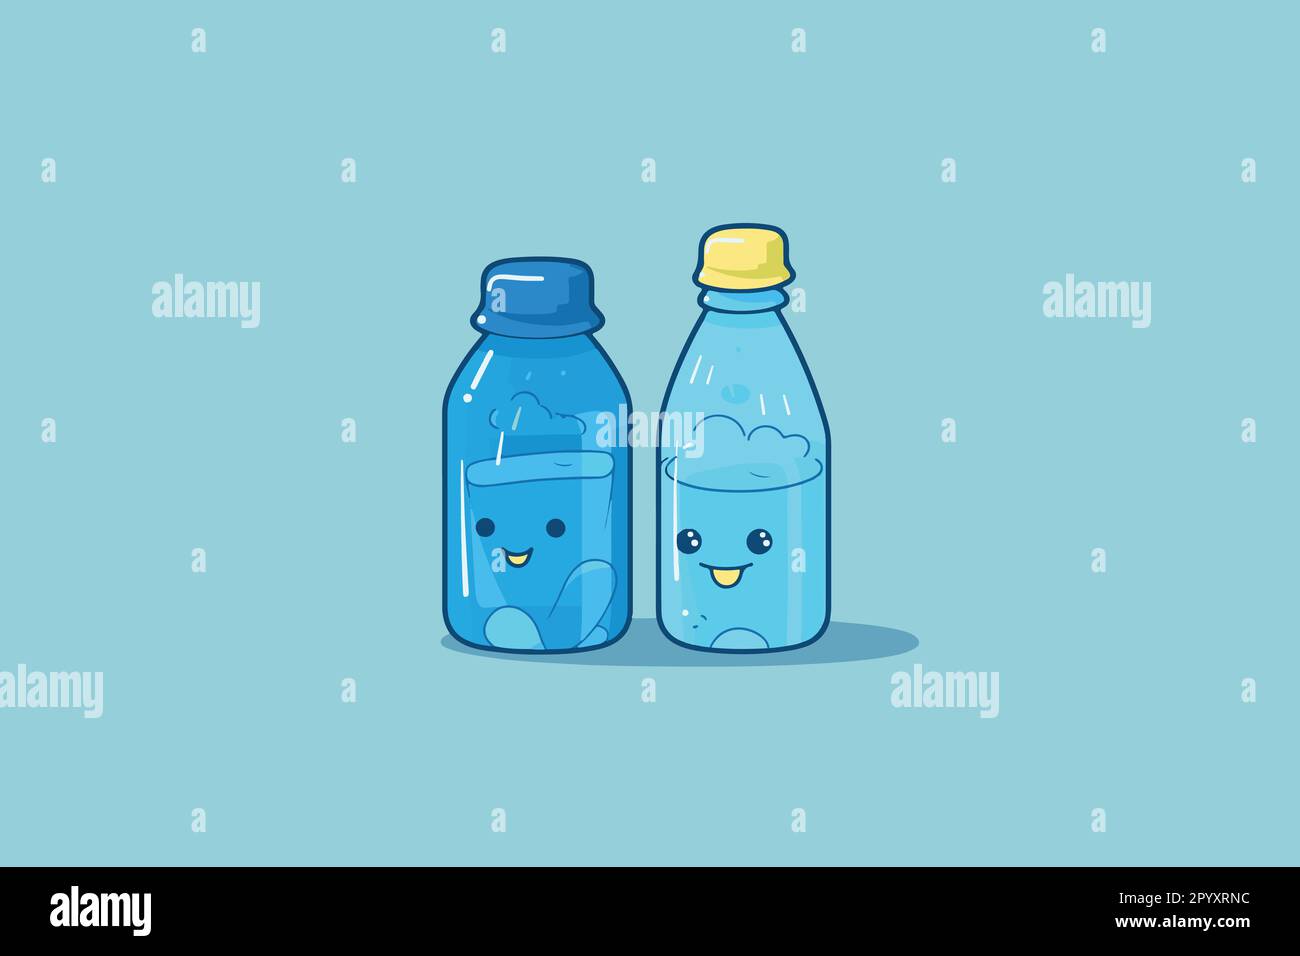 https://c8.alamy.com/comp/2PYXRNC/a-flat-vector-design-of-cute-happy-smiling-emoji-drinking-water-cartoon-bottles-a-couple-of-bottle-illustrations-2PYXRNC.jpg